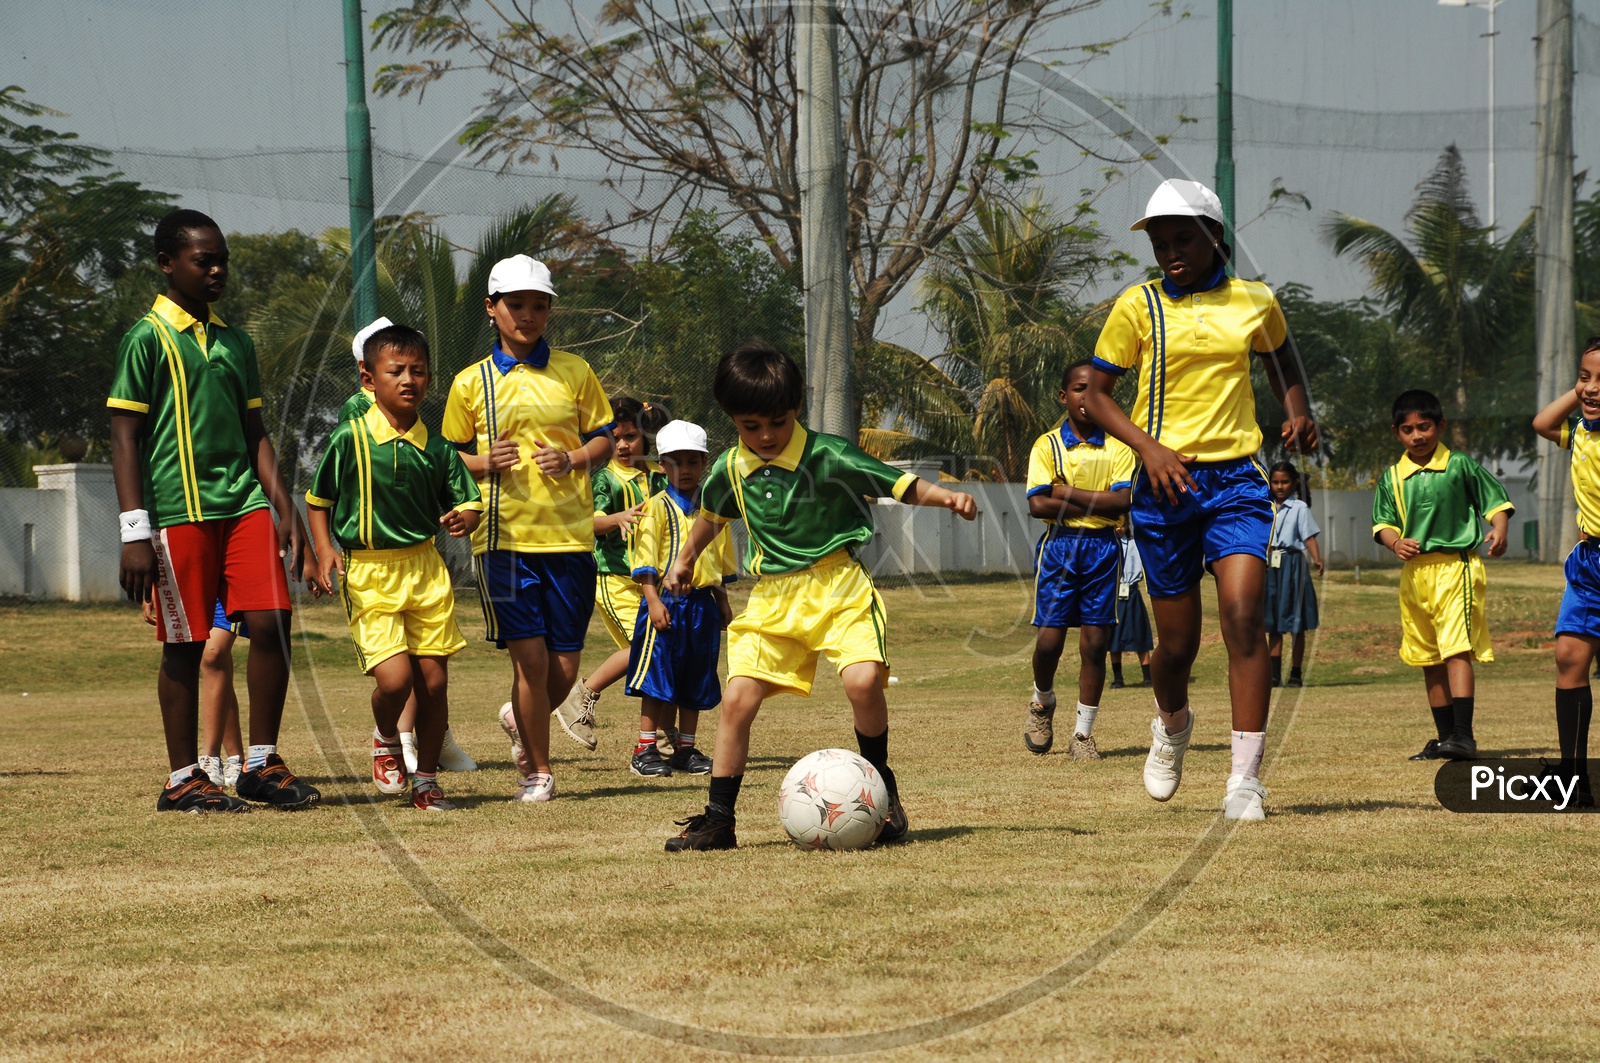 Children playing football in uniform